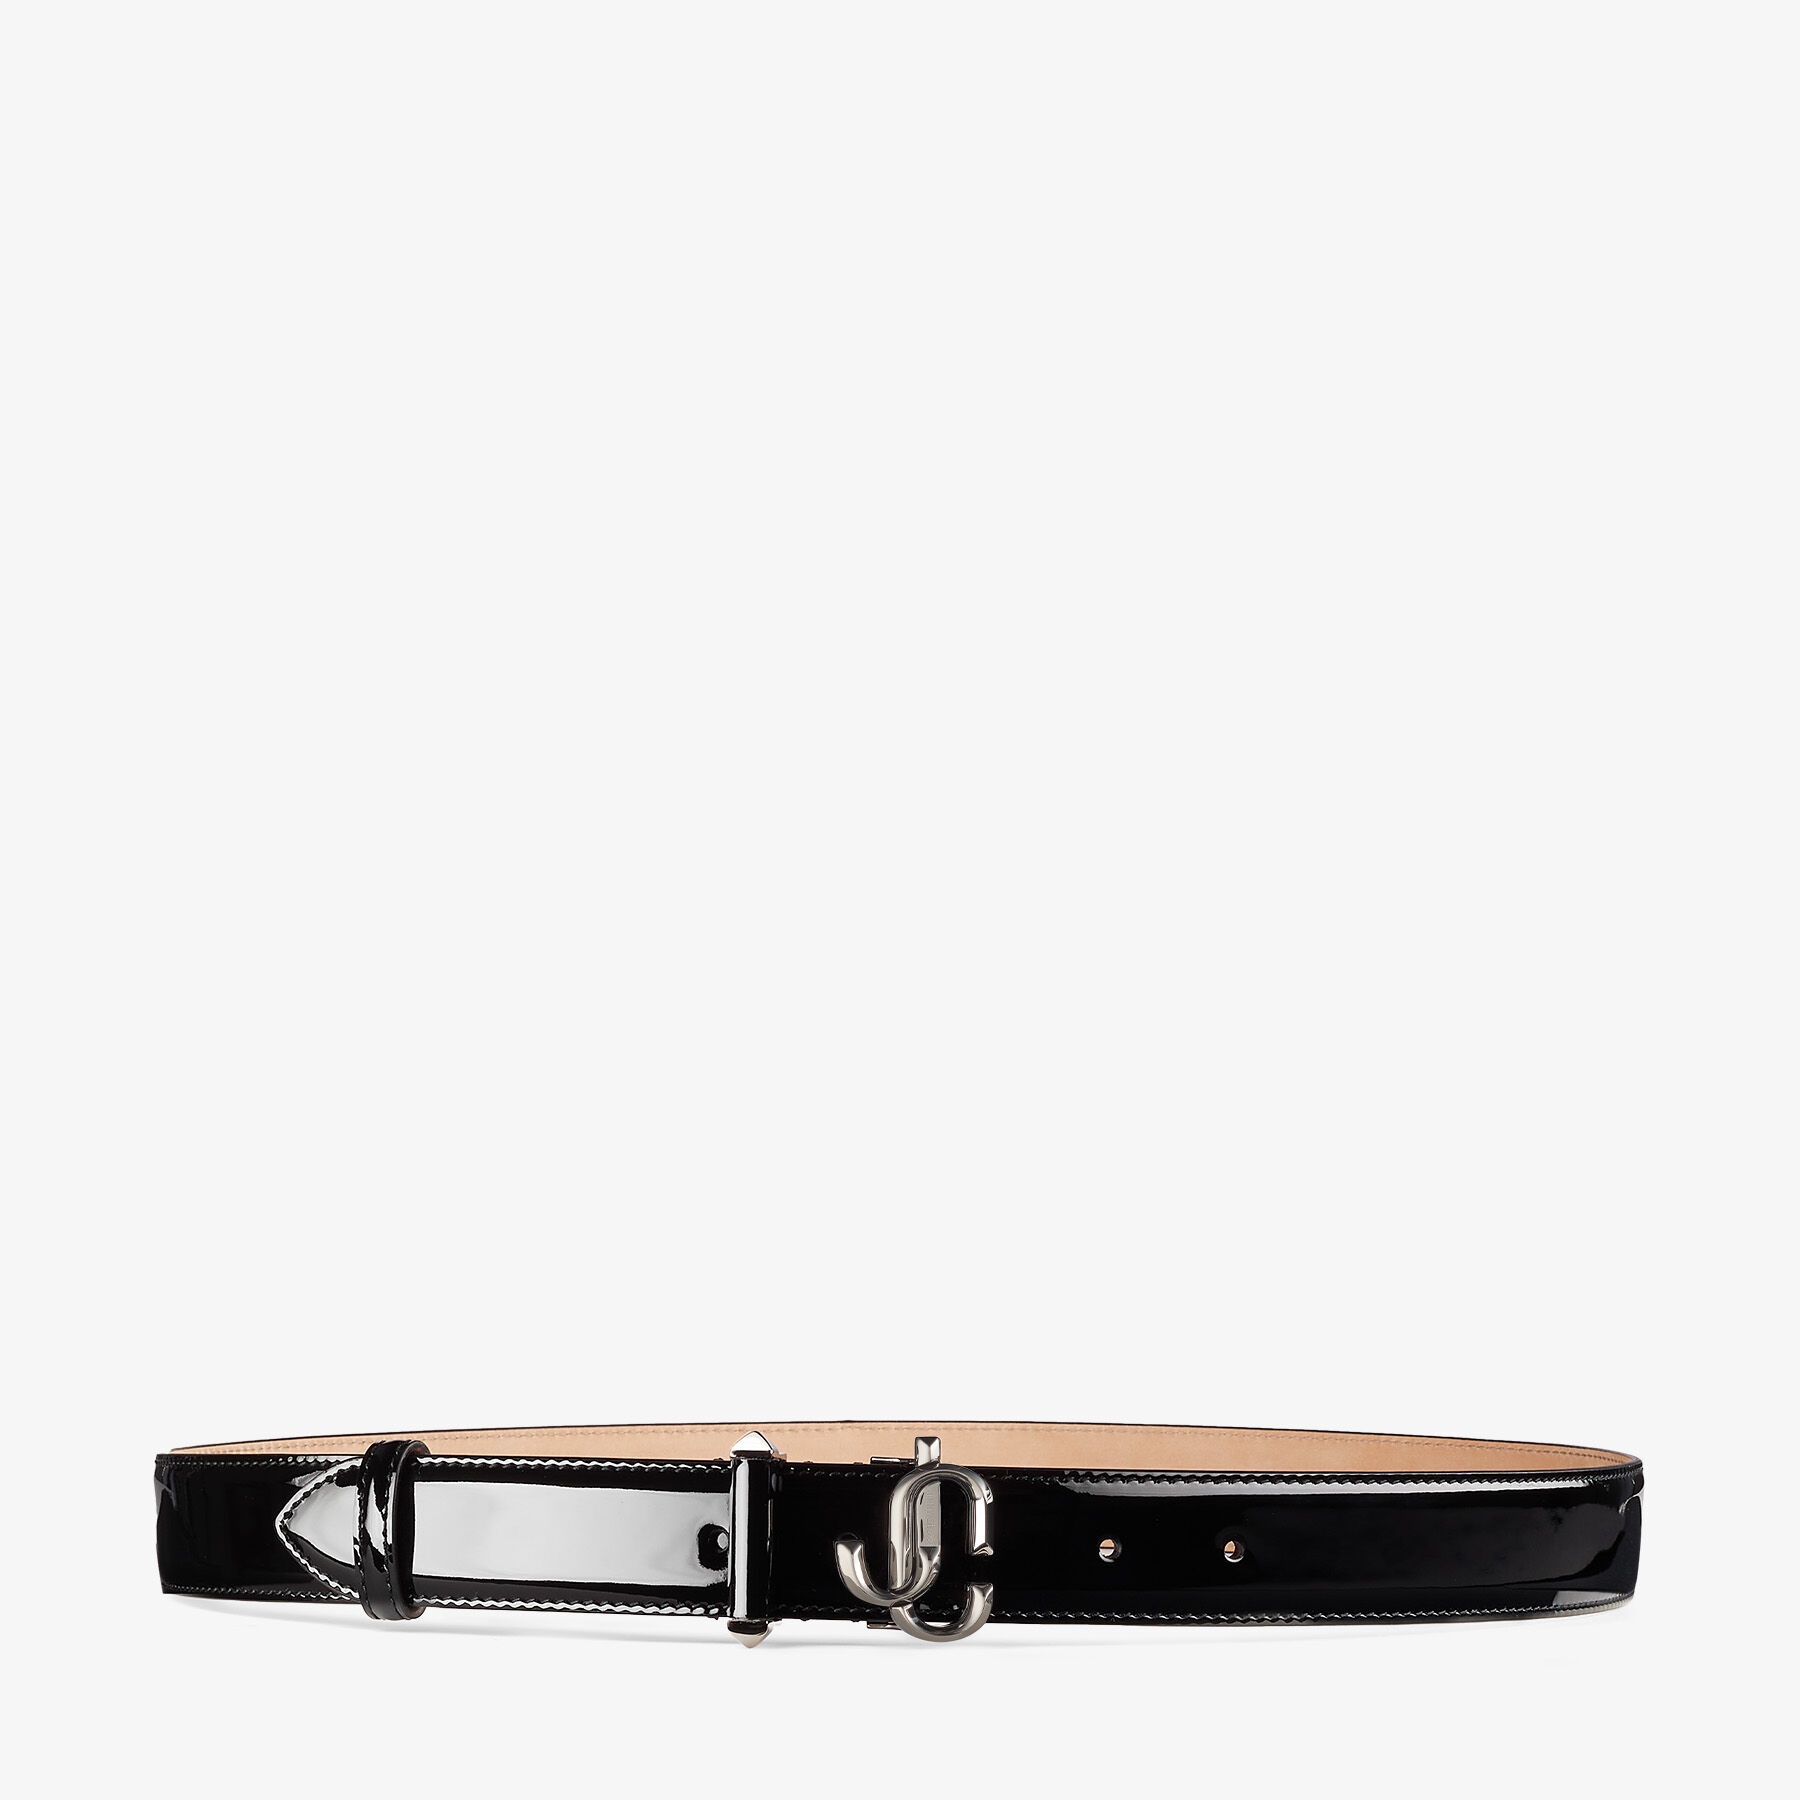 Jc-bar Blt
Black Patent Leather Bar Belt with JC Emblem - 1